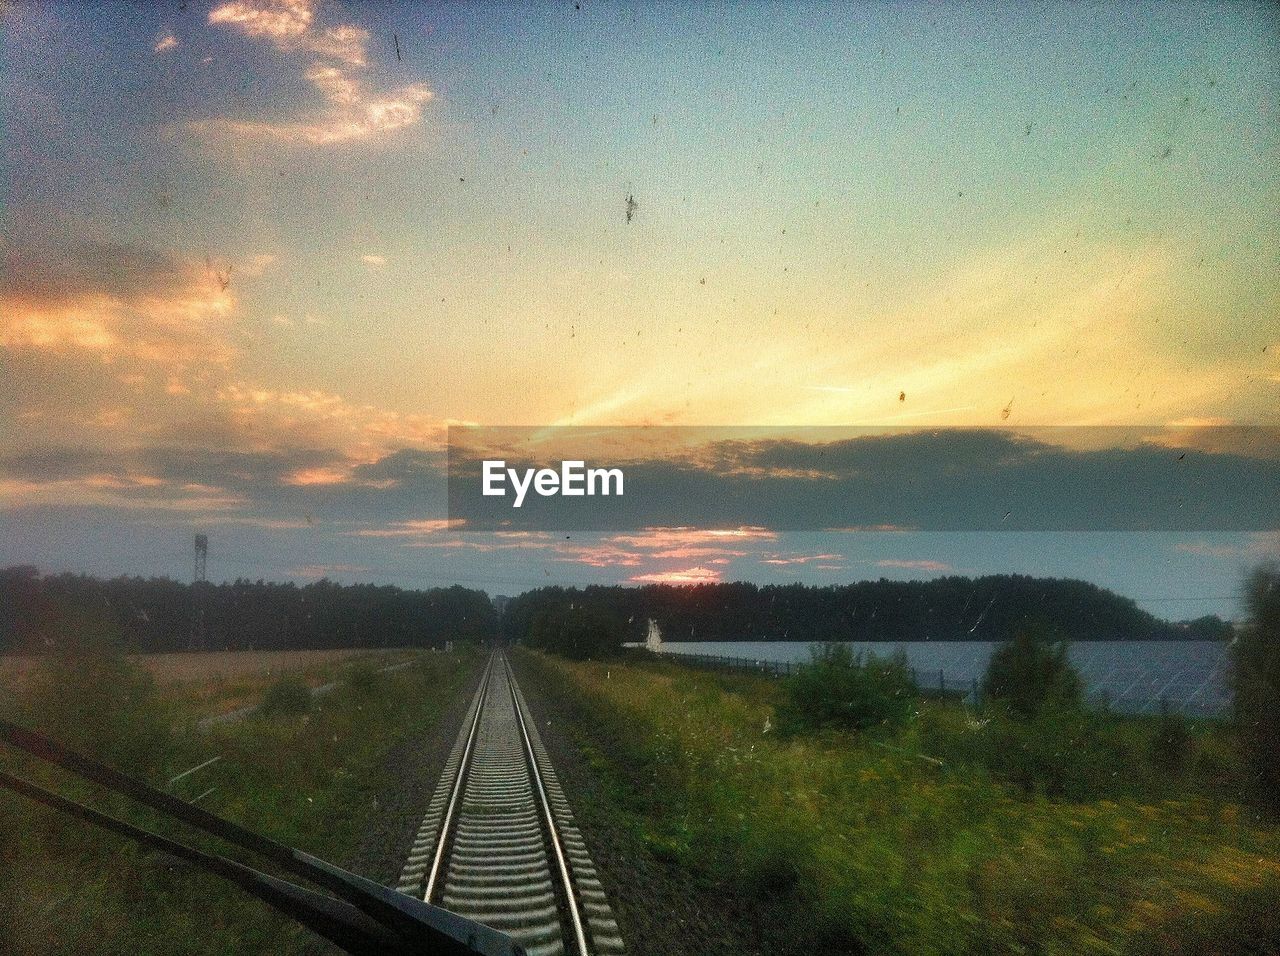 Railway tracks and landscape seen through train windshield